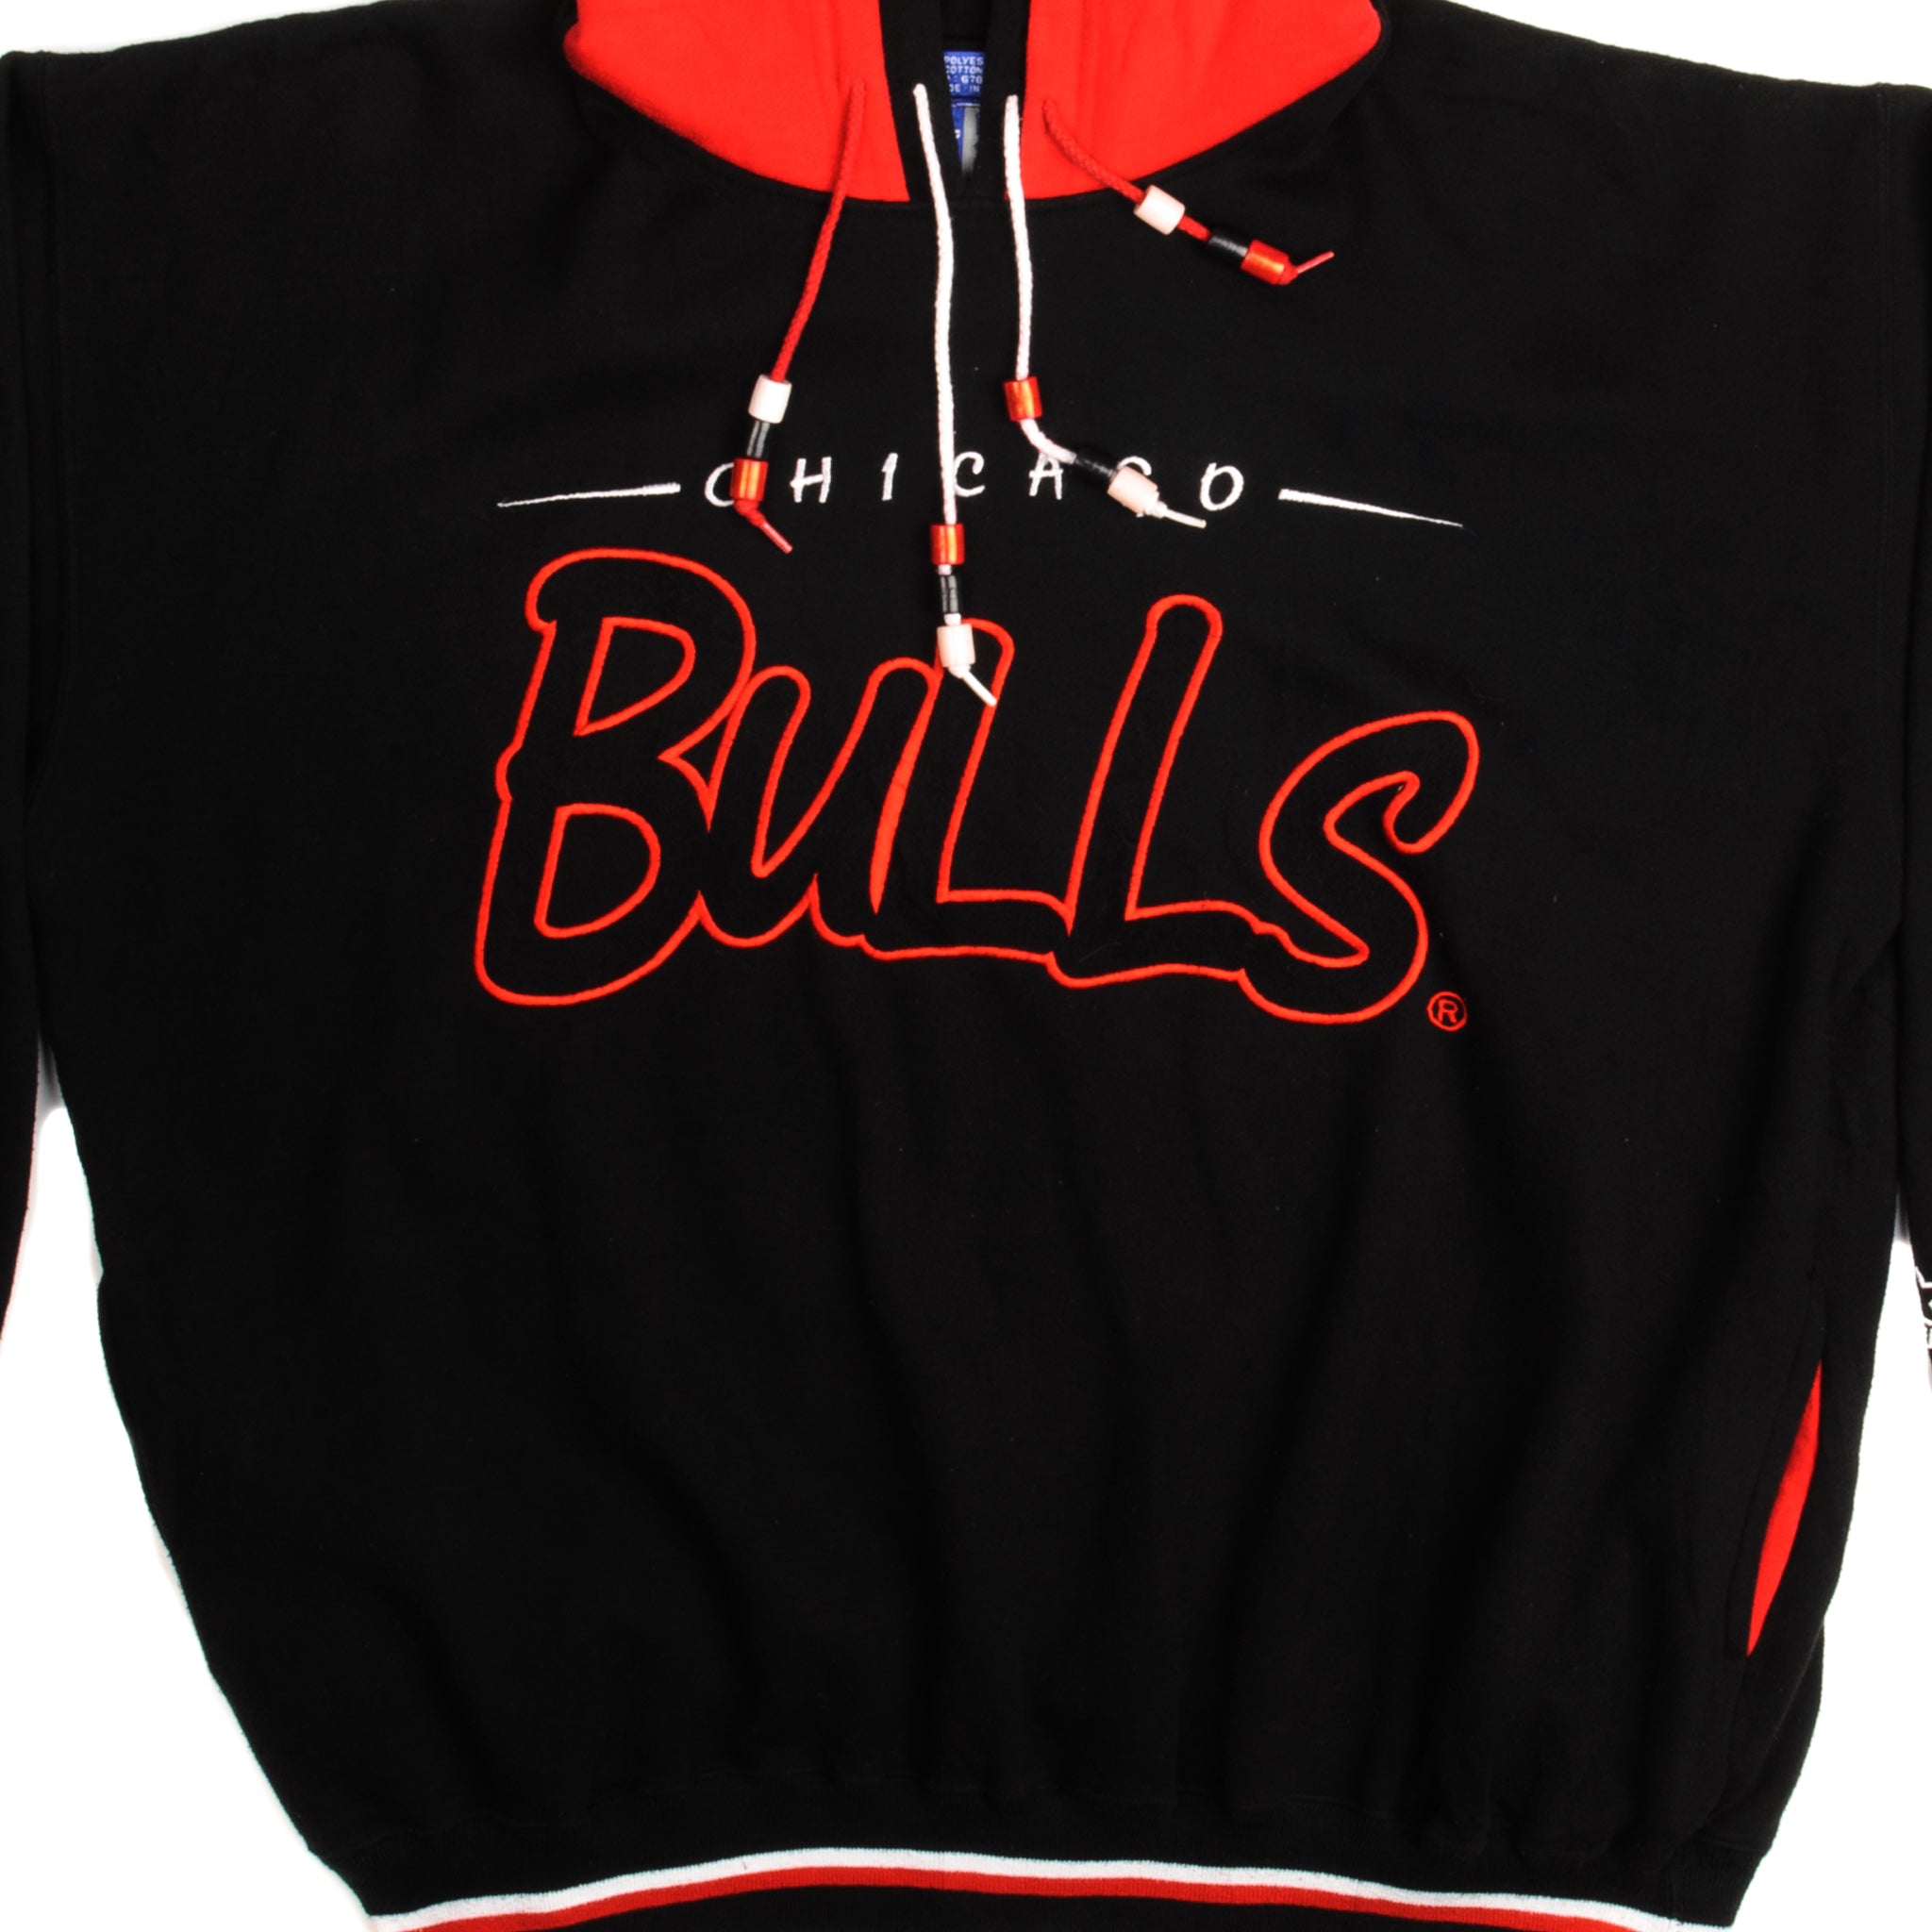 Chicago Bulls Championship Hoodie Red Black White, XL